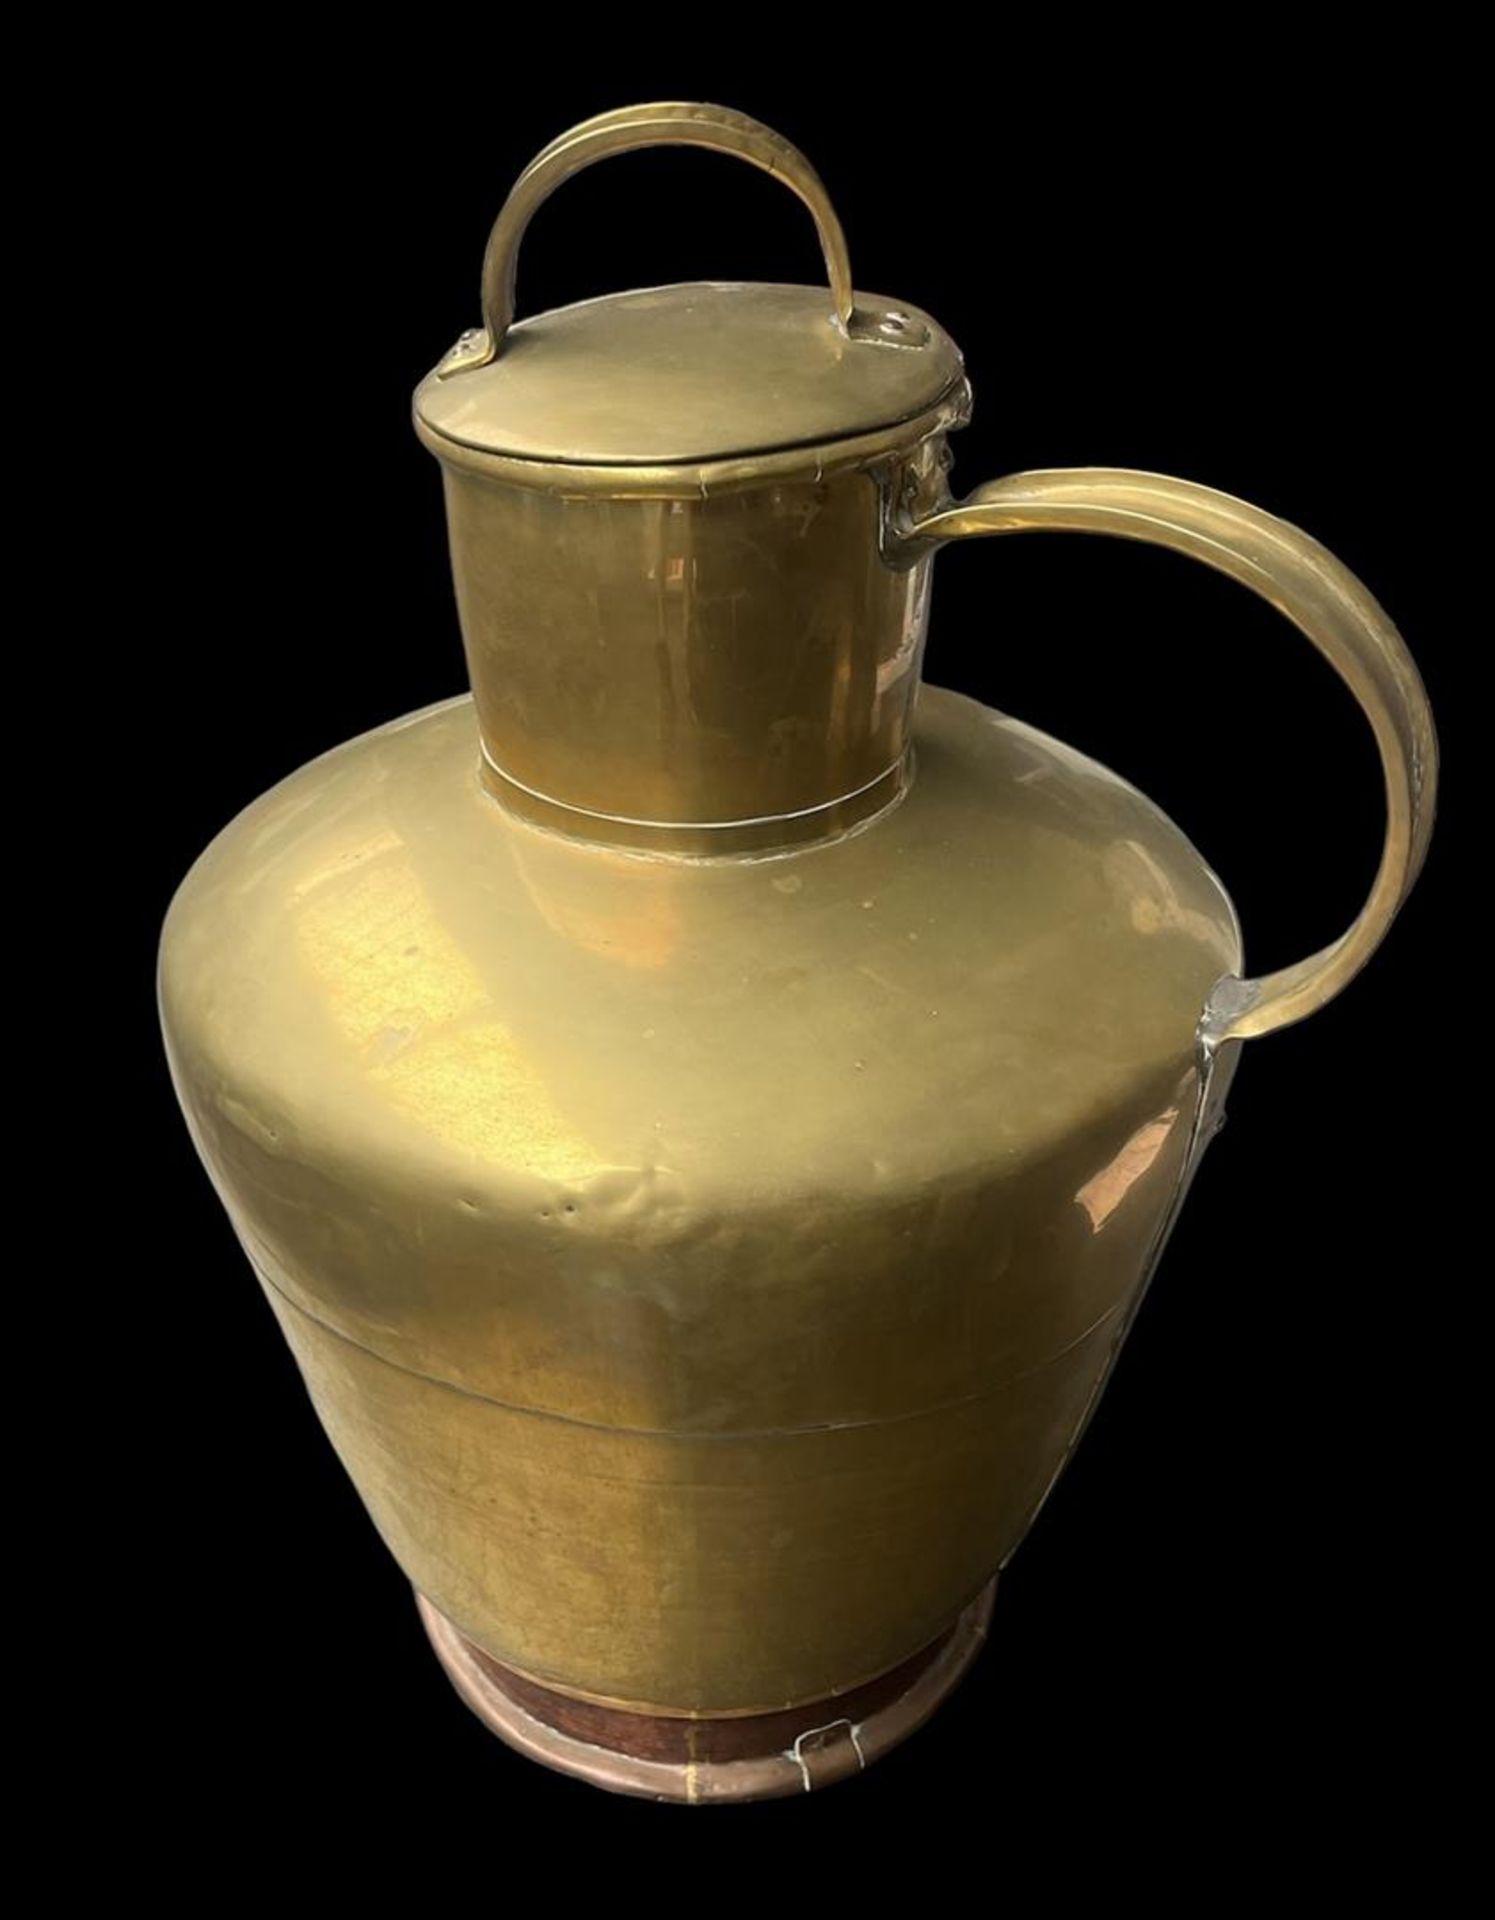 A large copper milk jug or water jug, 19th century.
H.: 70 cm.